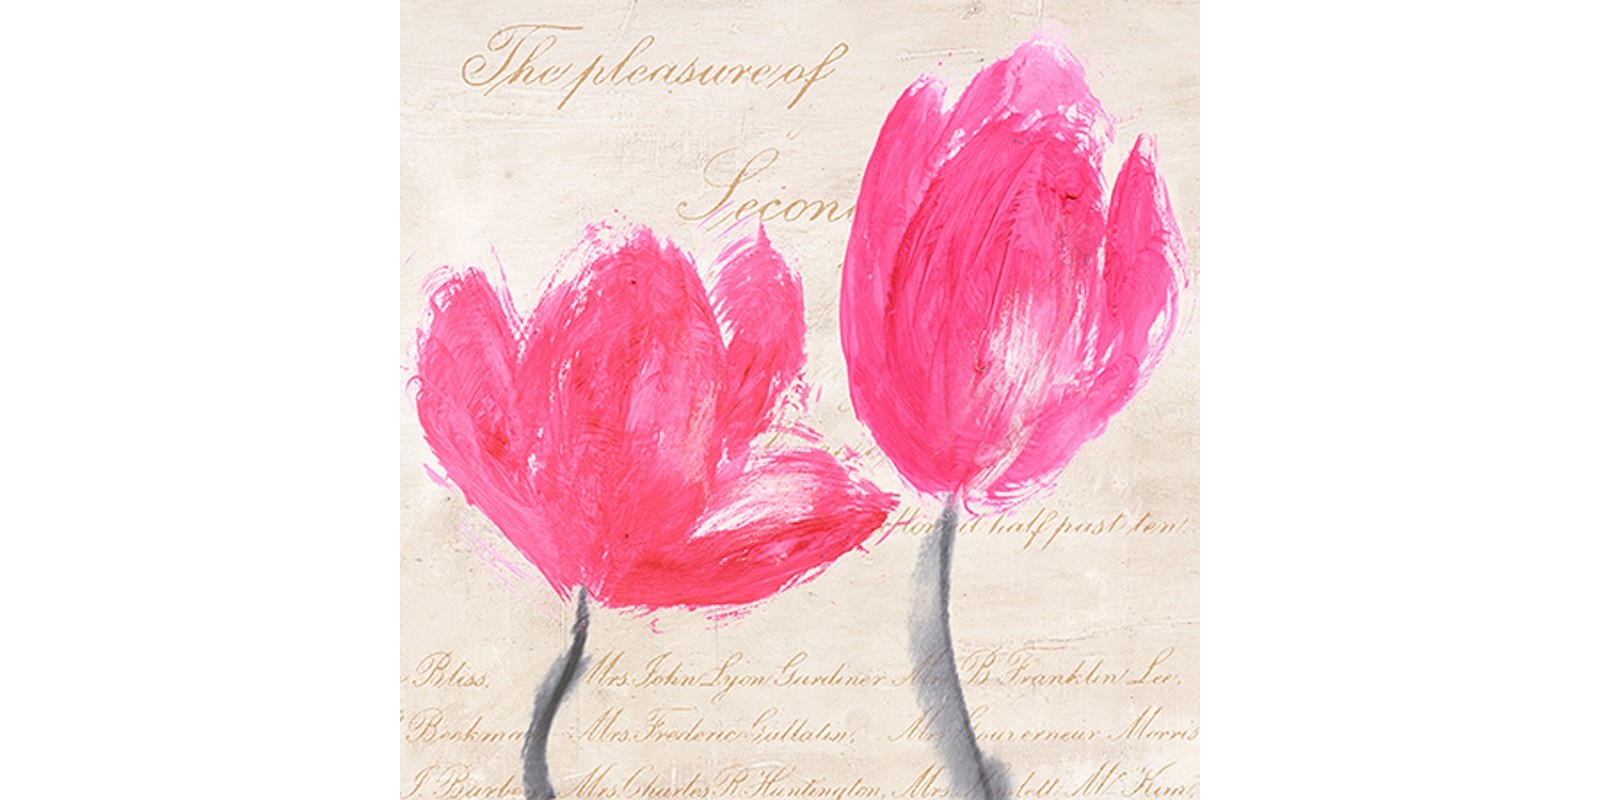 Muriel Phelipau - Classic Tulips I